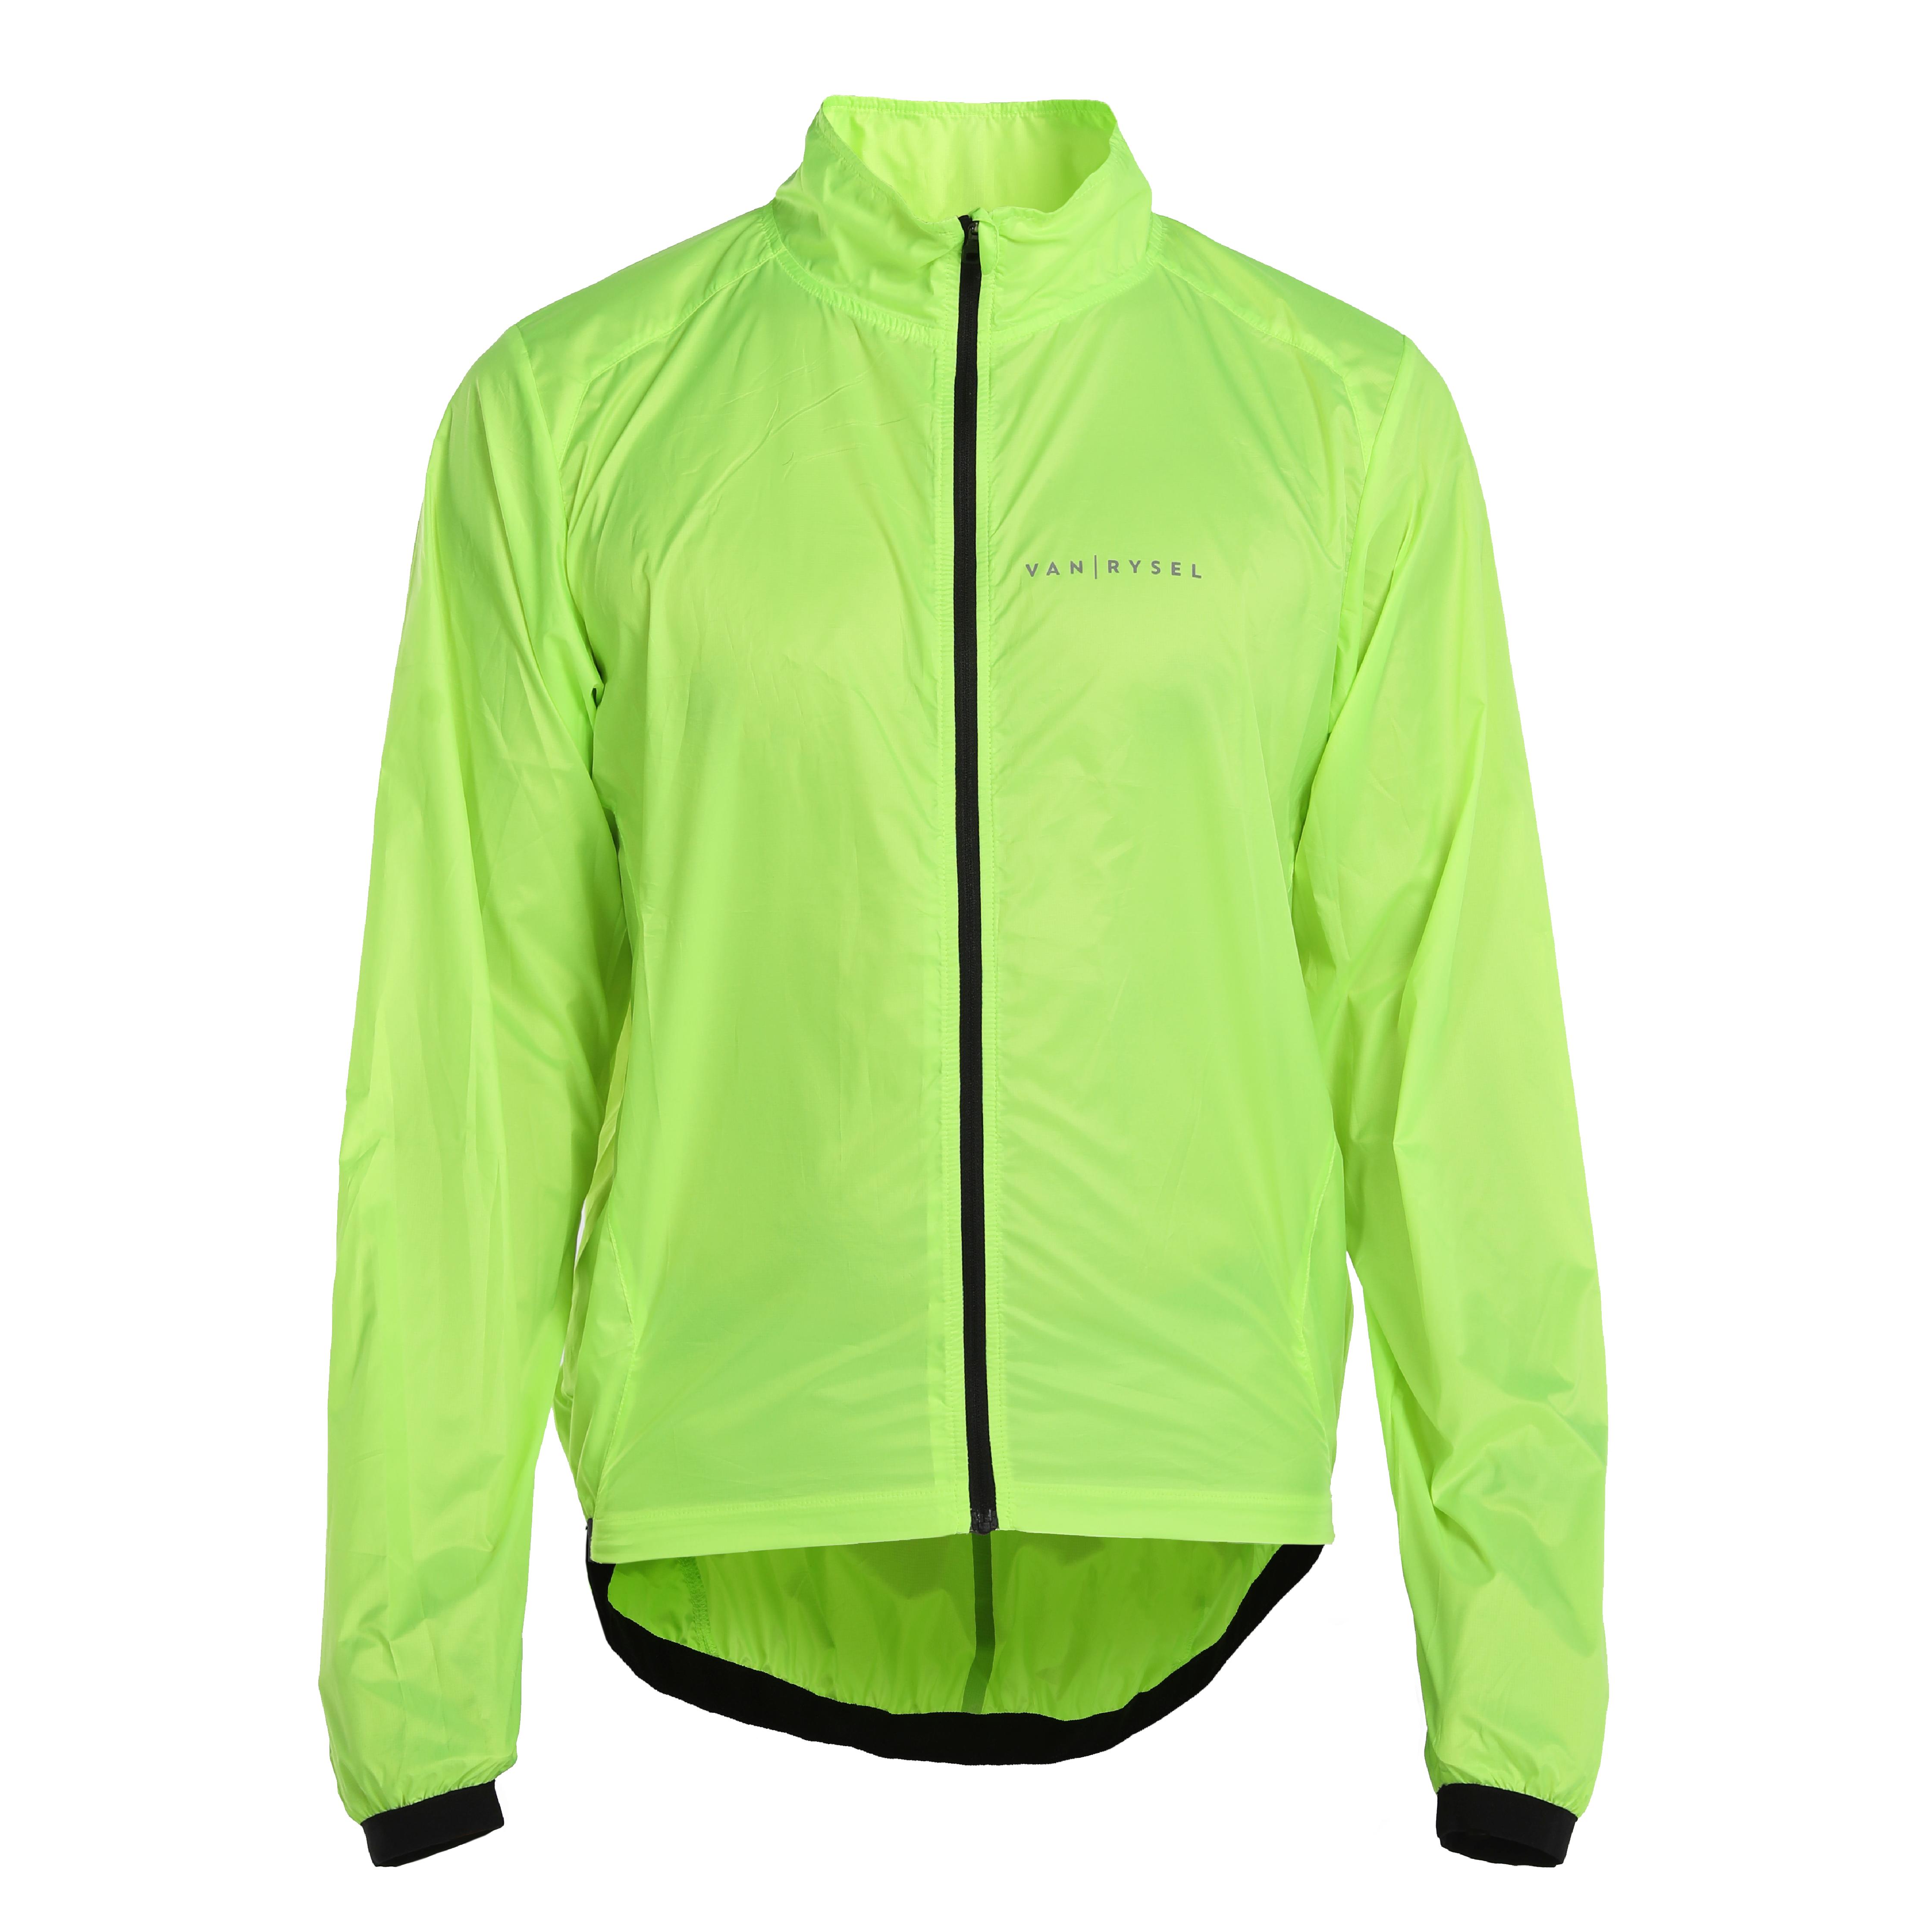 MEN FASHION Jackets Sports Black/Green XL discount 82% Kipsta light jacket 